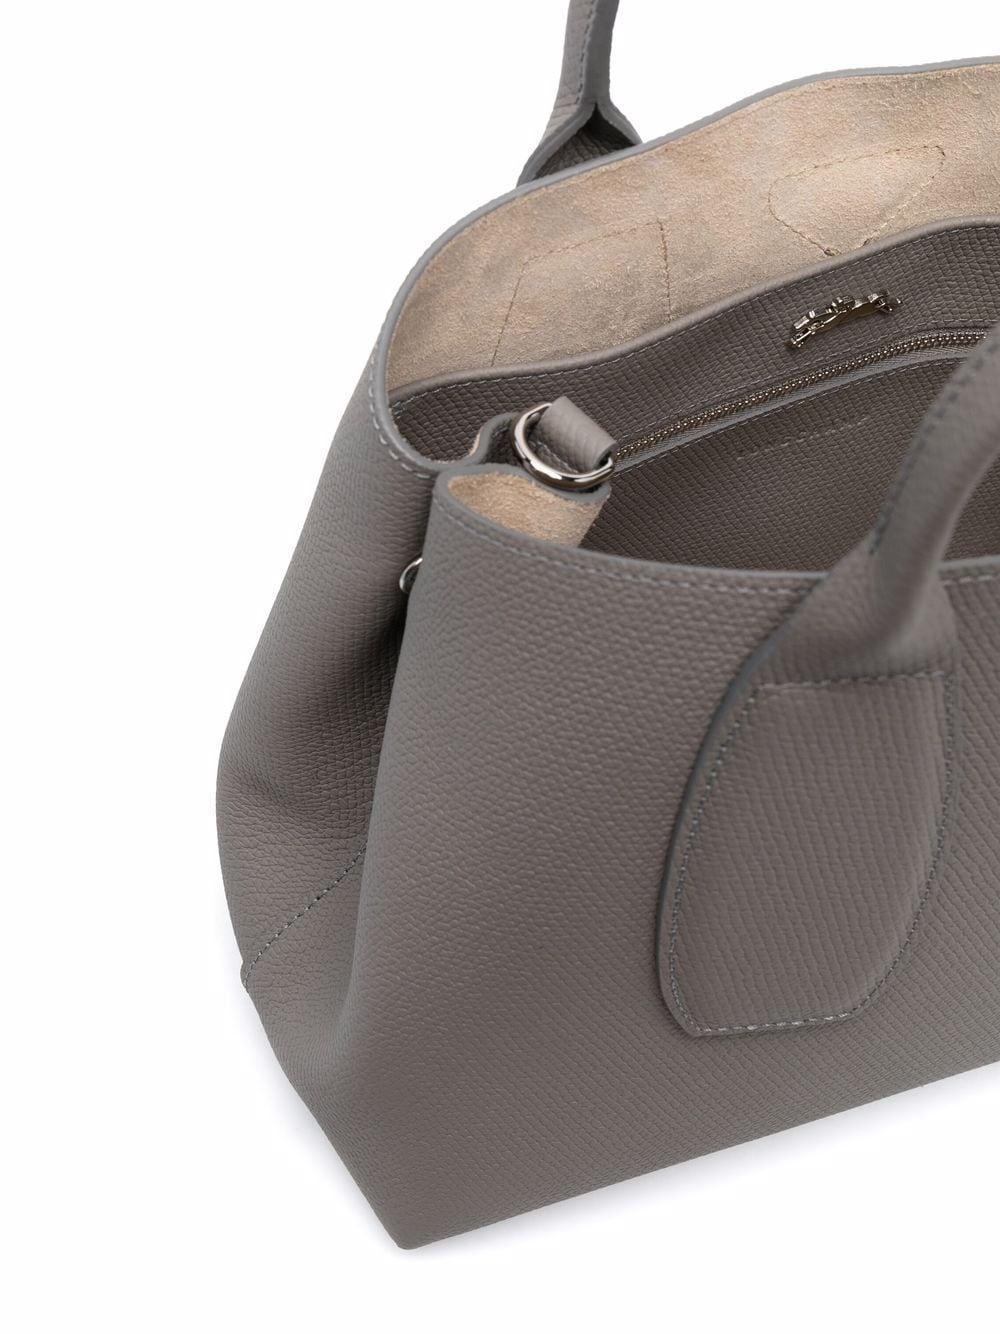 Longchamp Roseau Top Handle Bag M in Grey Leather — UFO No More